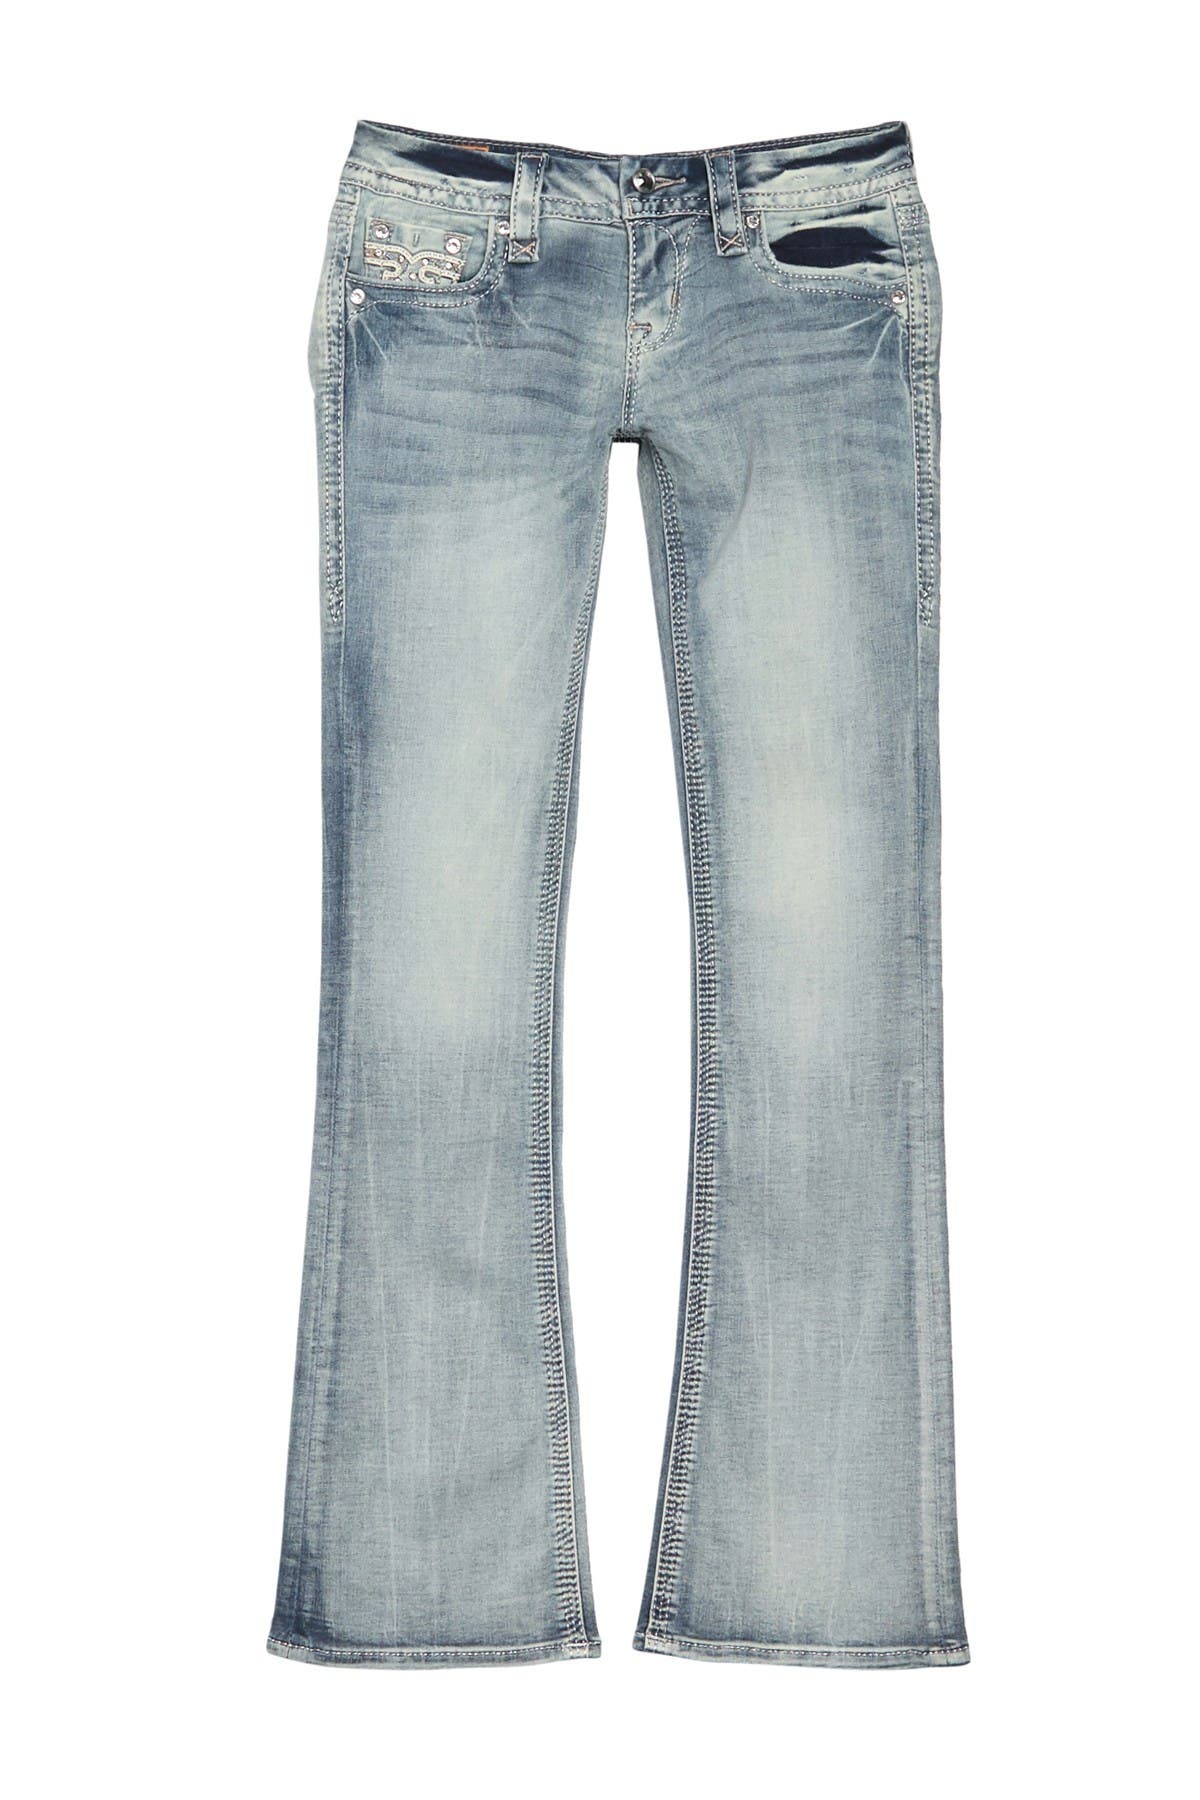 gray rock revival jeans